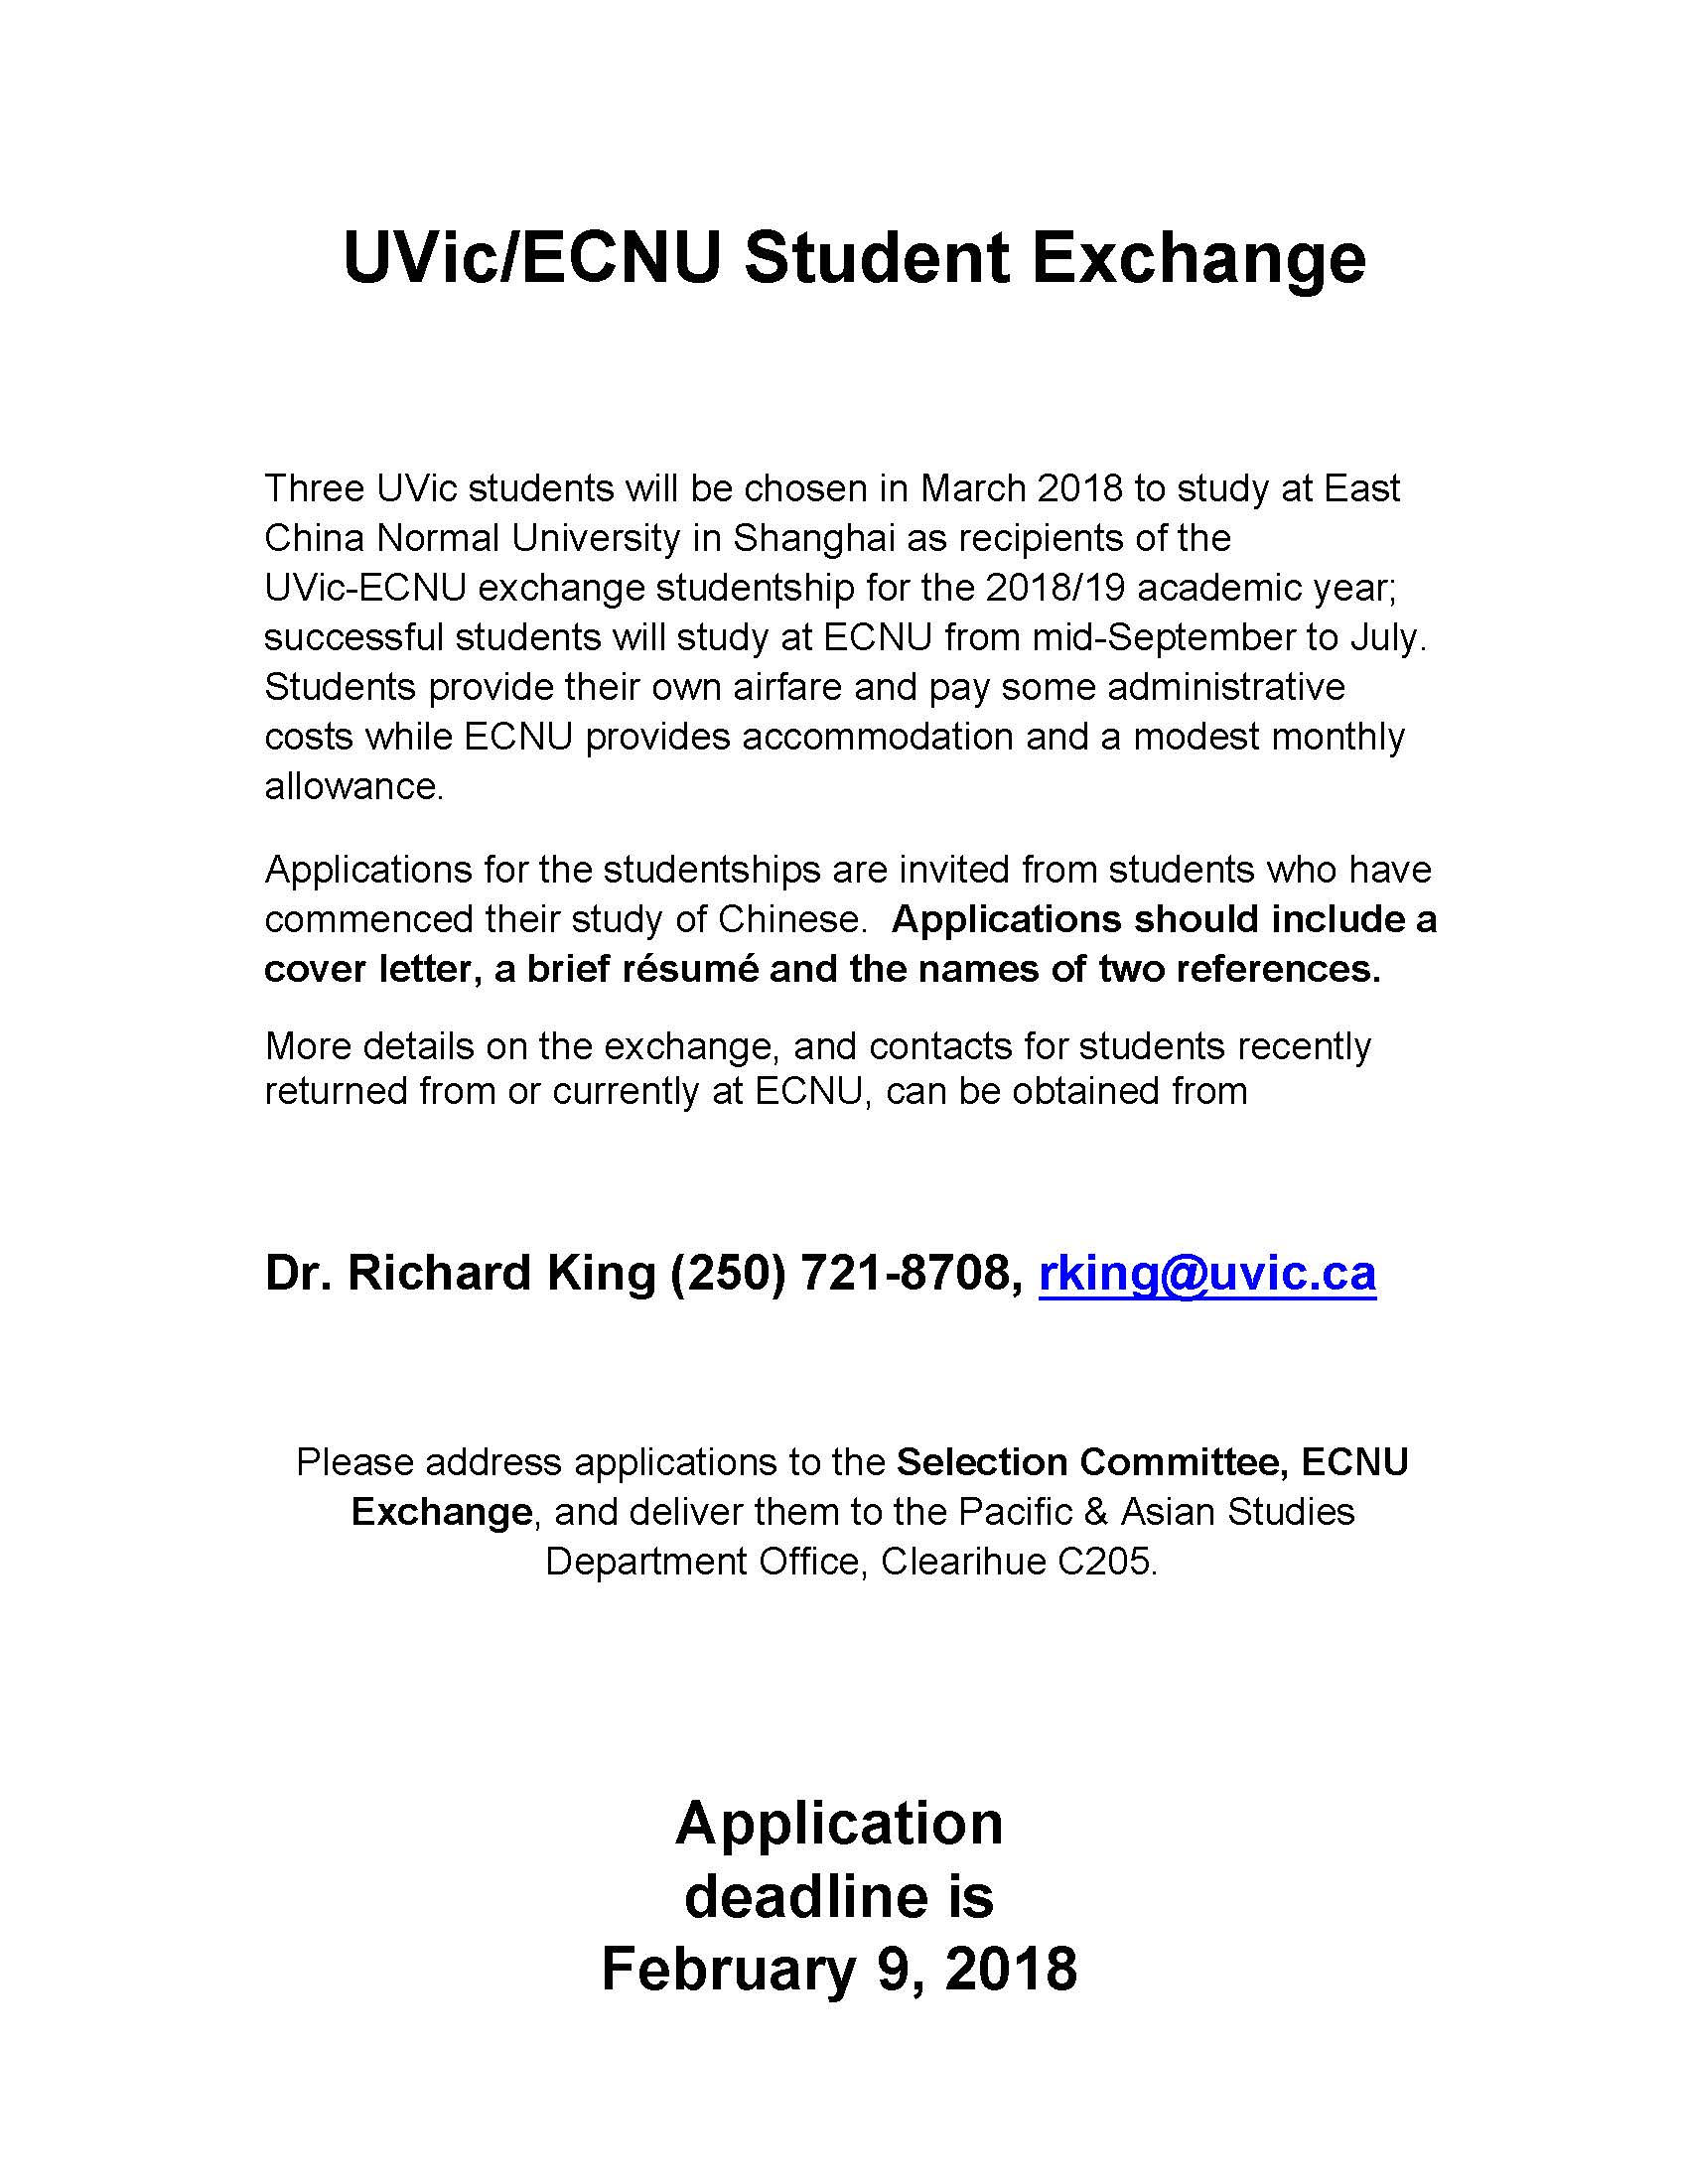 UVic ECNU Student Exchange 2018